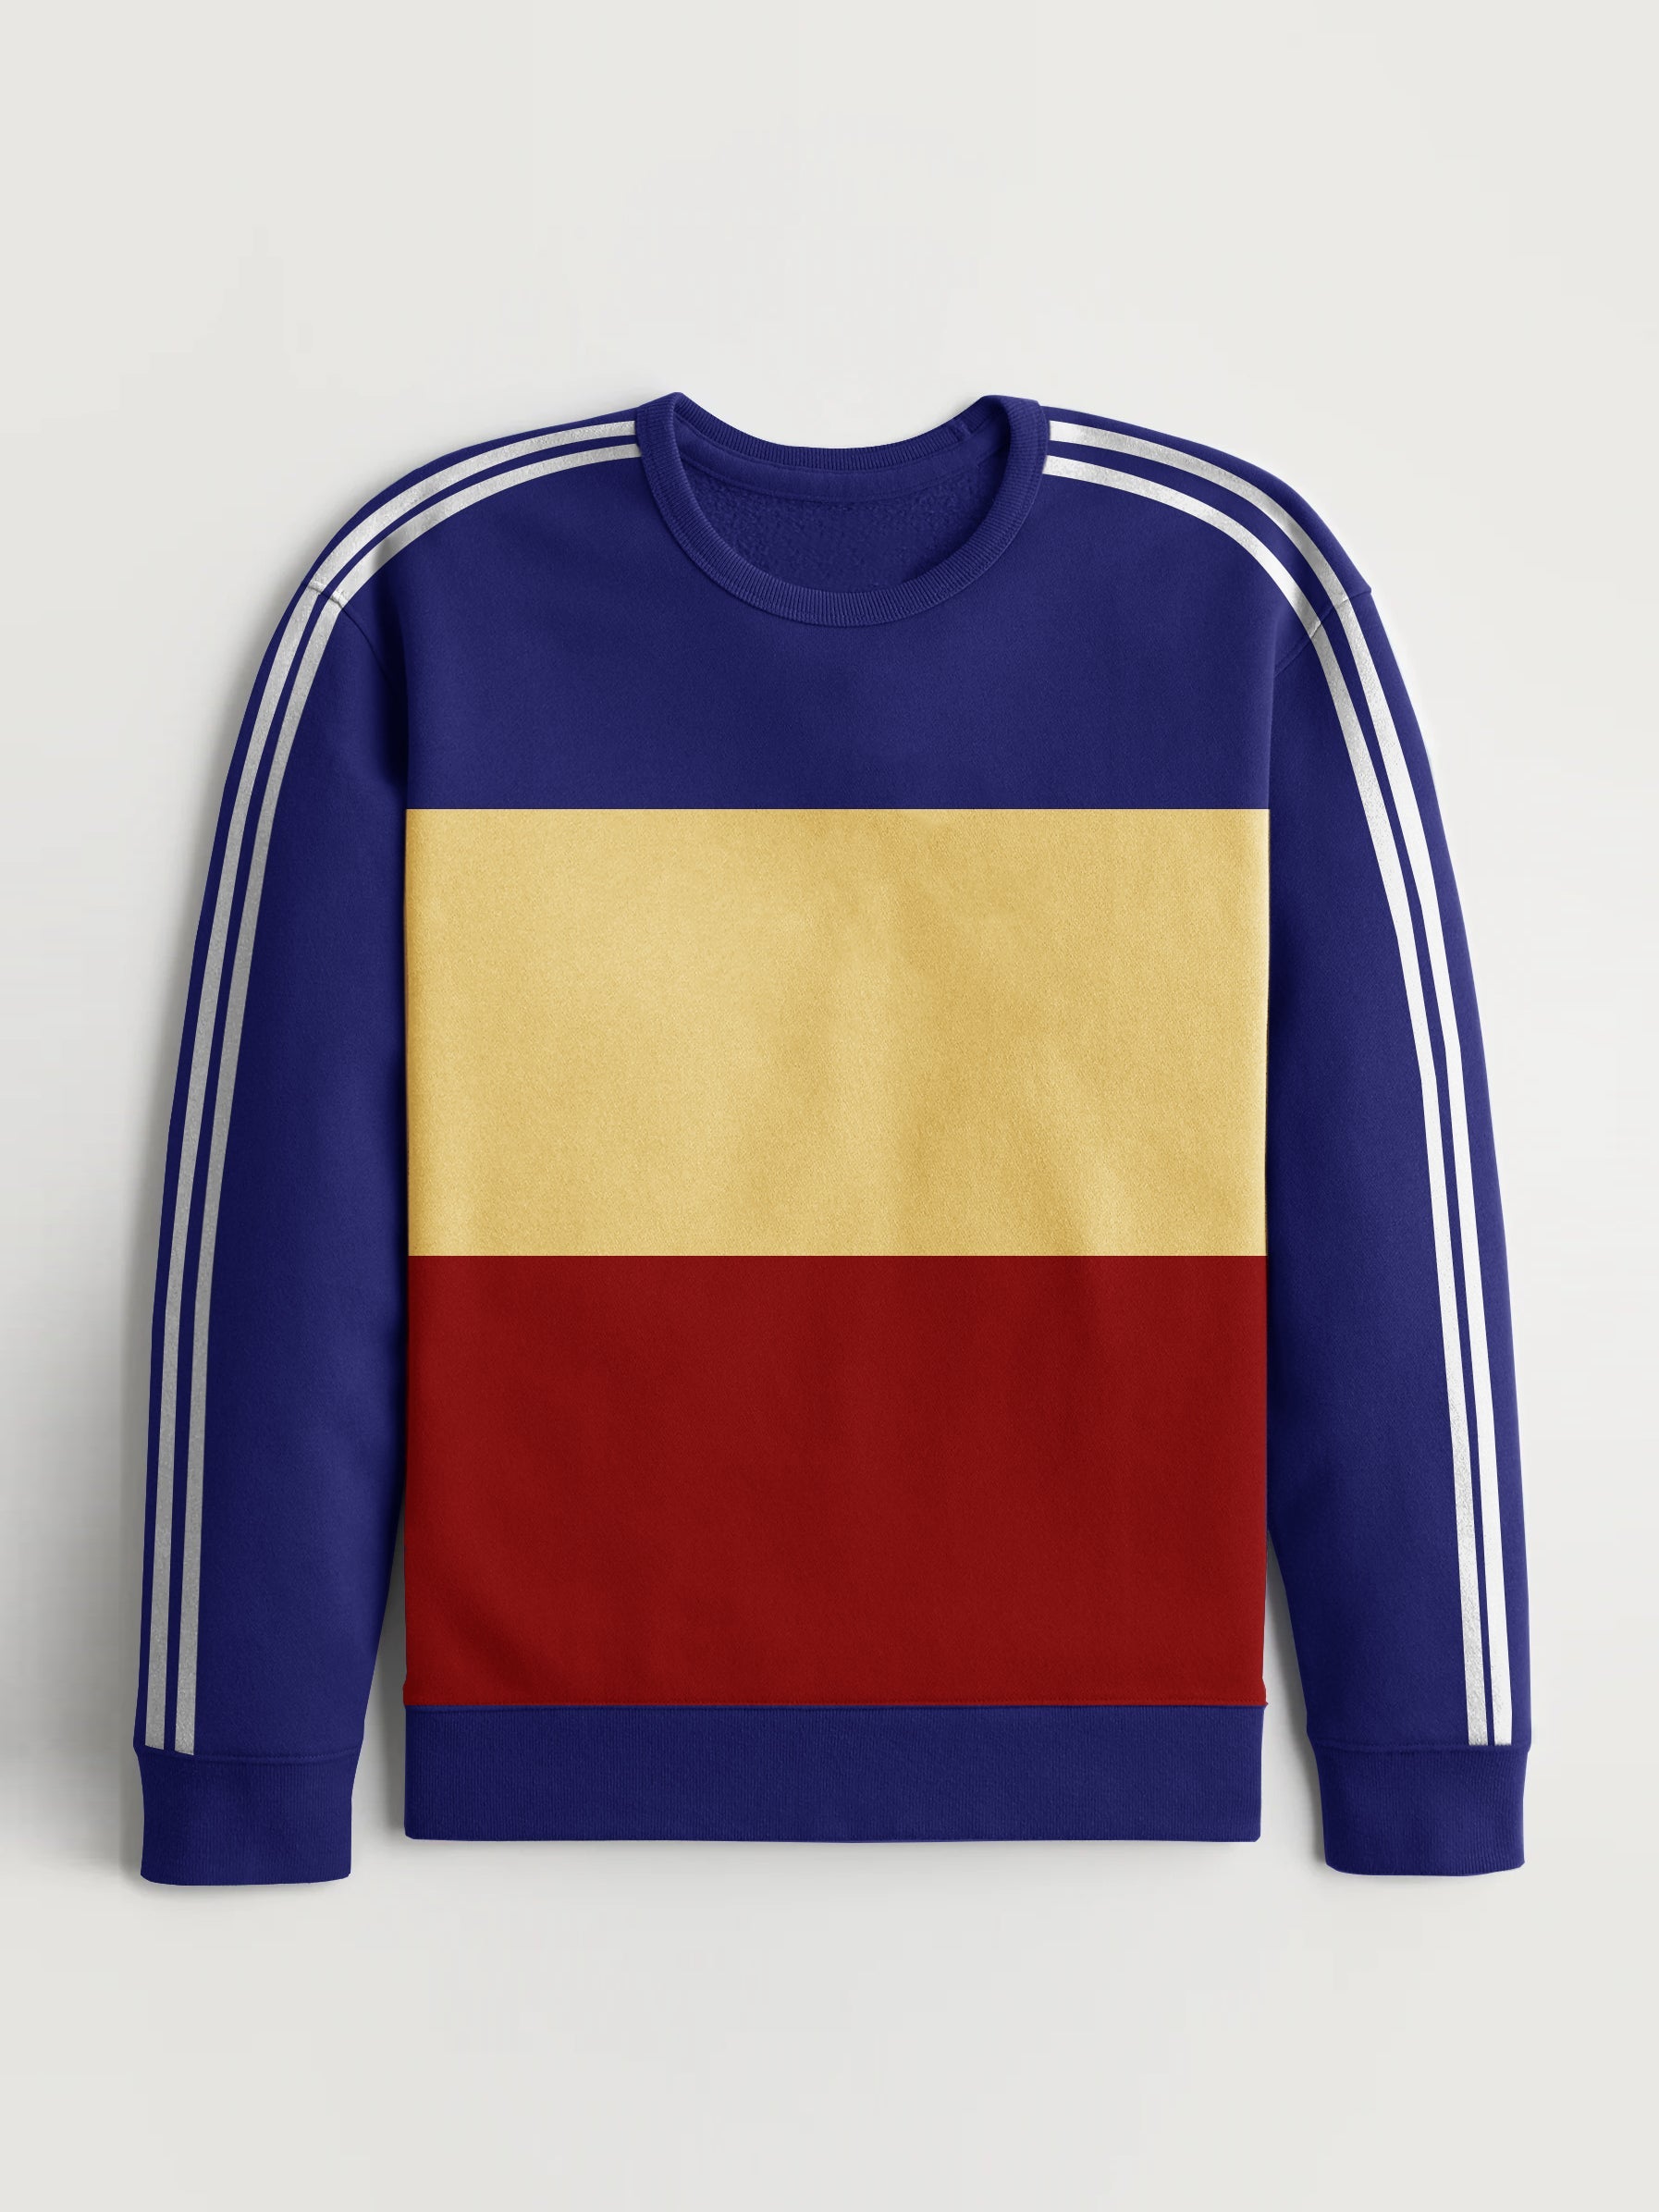 Premium Quality Crew Neck Fleece Sweatshirt For Men-Royal Blue With White Stripes-RT1554